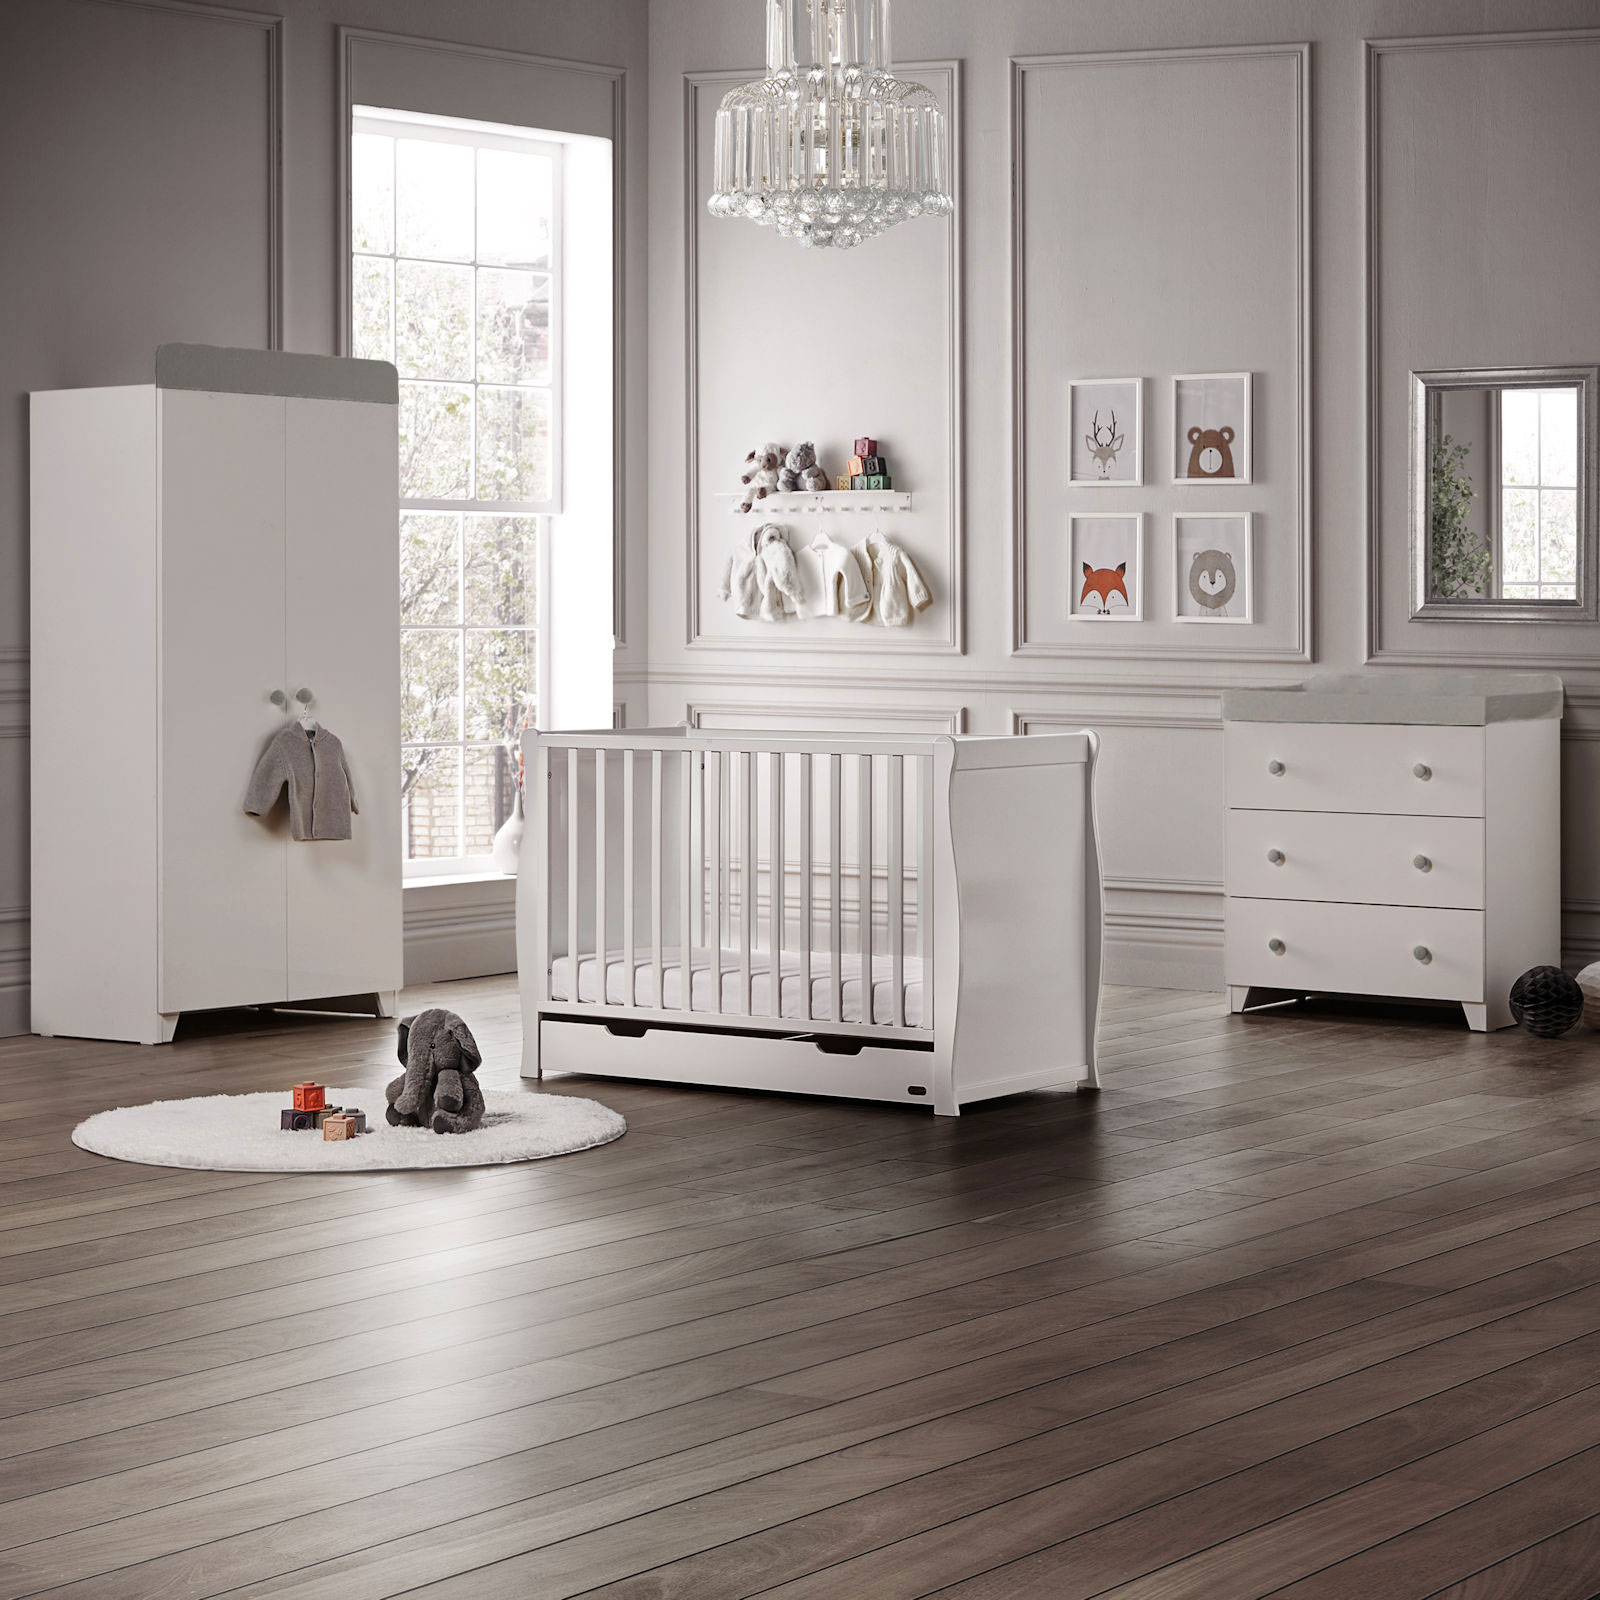 Puggle Chelford Sleigh Cot 6 Piece Nursery Furniture Set With Maxi Air Cool Mattress - White/White & Grey